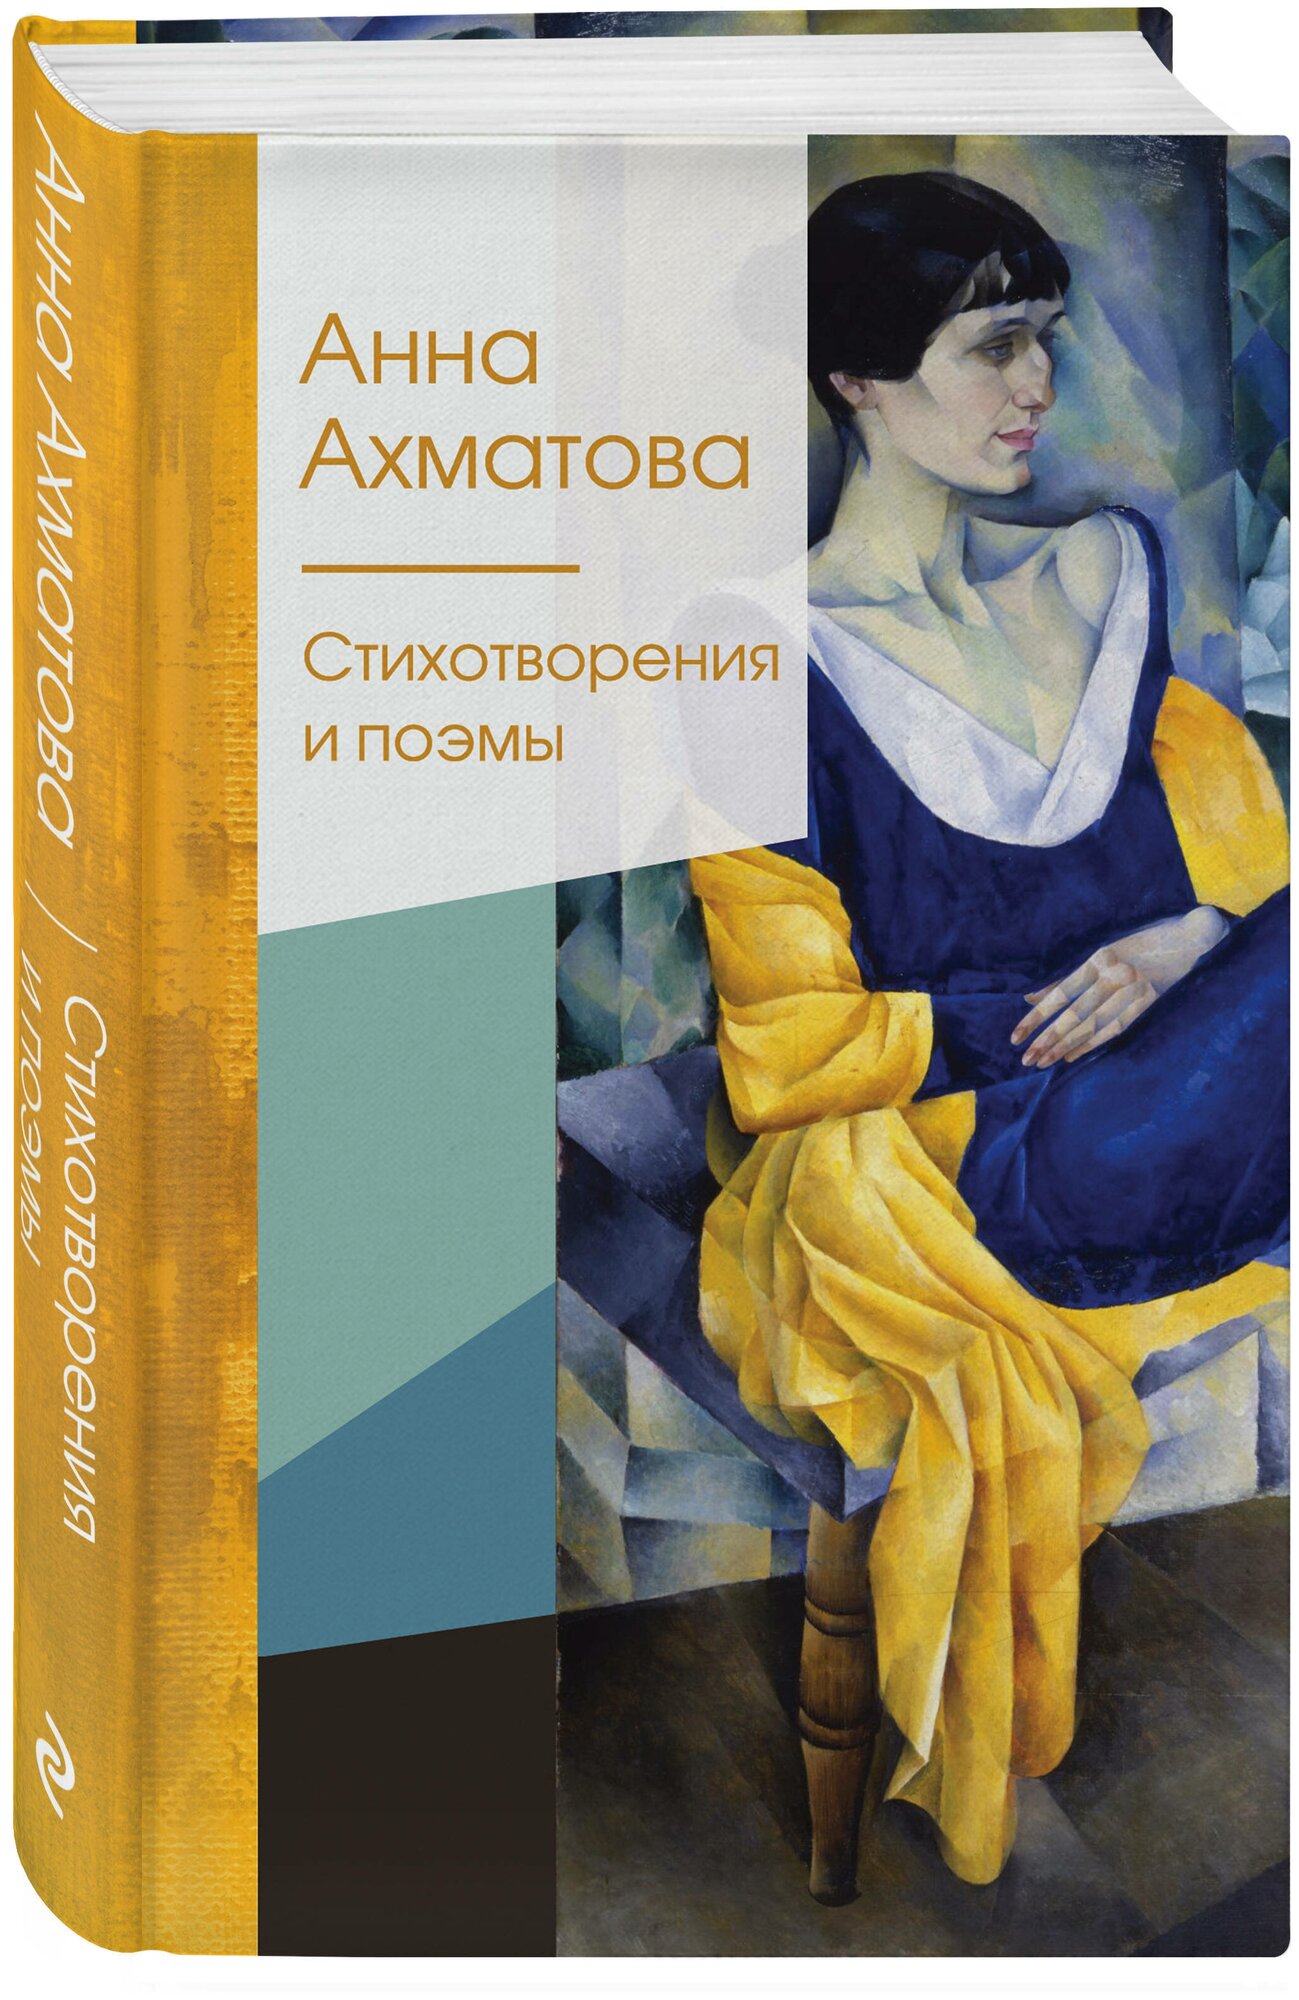 Ахматова А. А. Стихотворения и поэмы